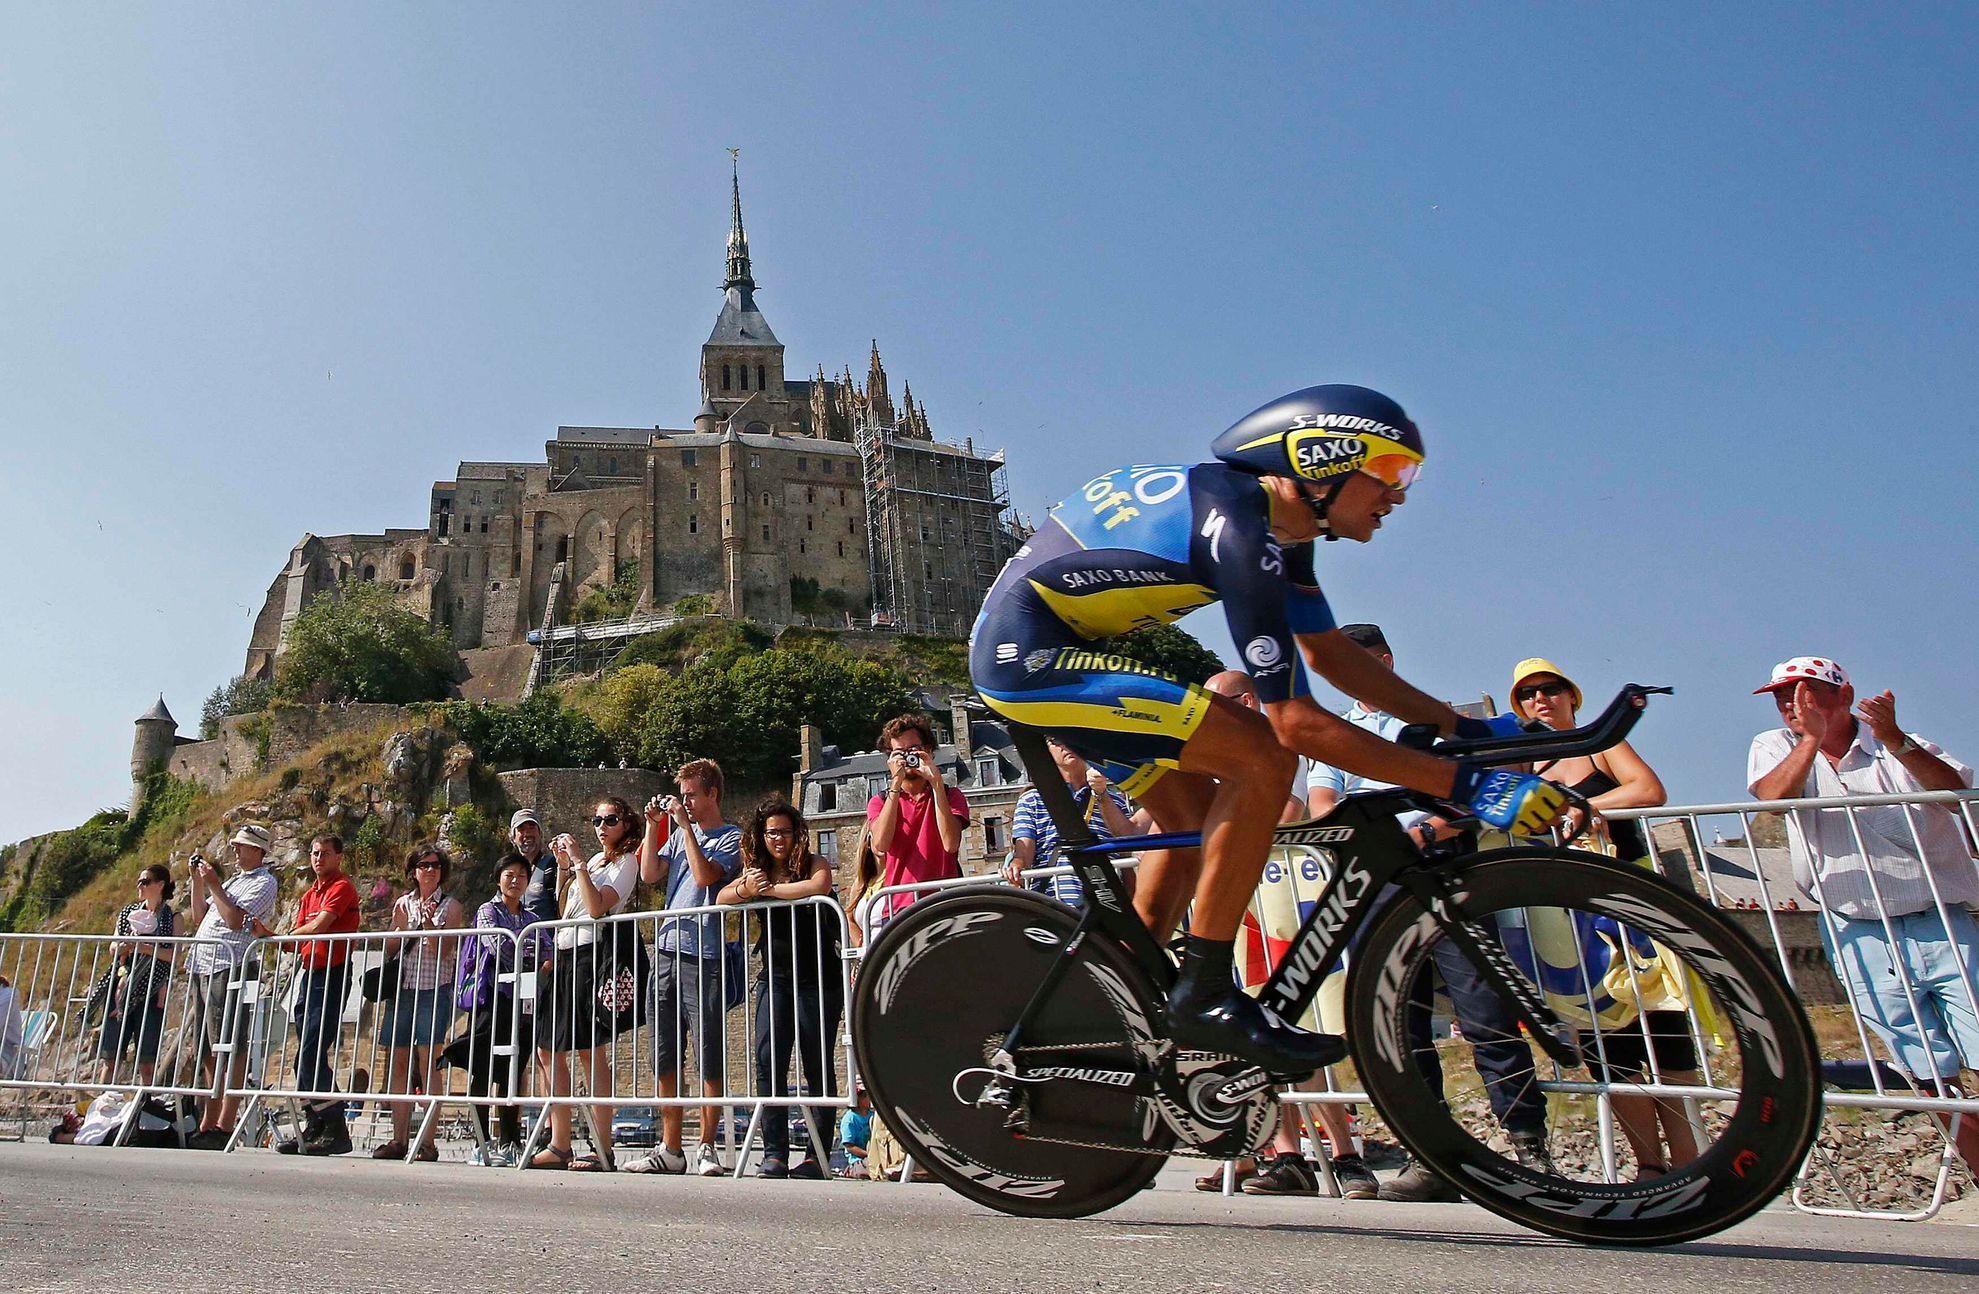 Tour de France 2013 - 11. etapa, časovka (Roman Kreuziger)